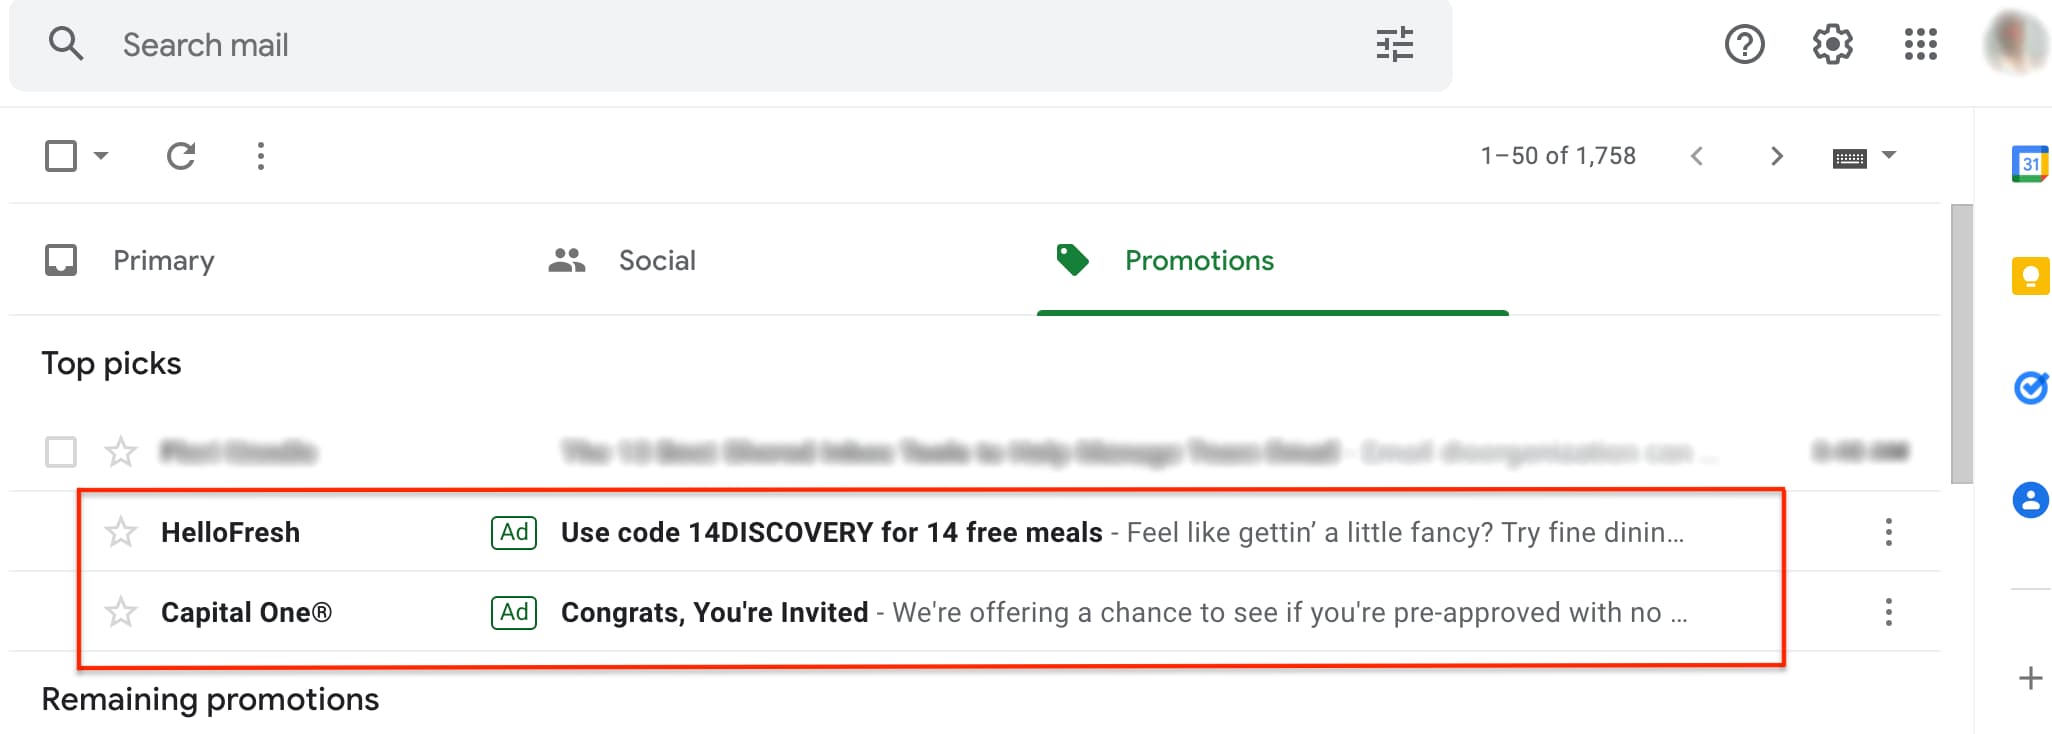 google discovery ad gmail feed%20(1) jpg